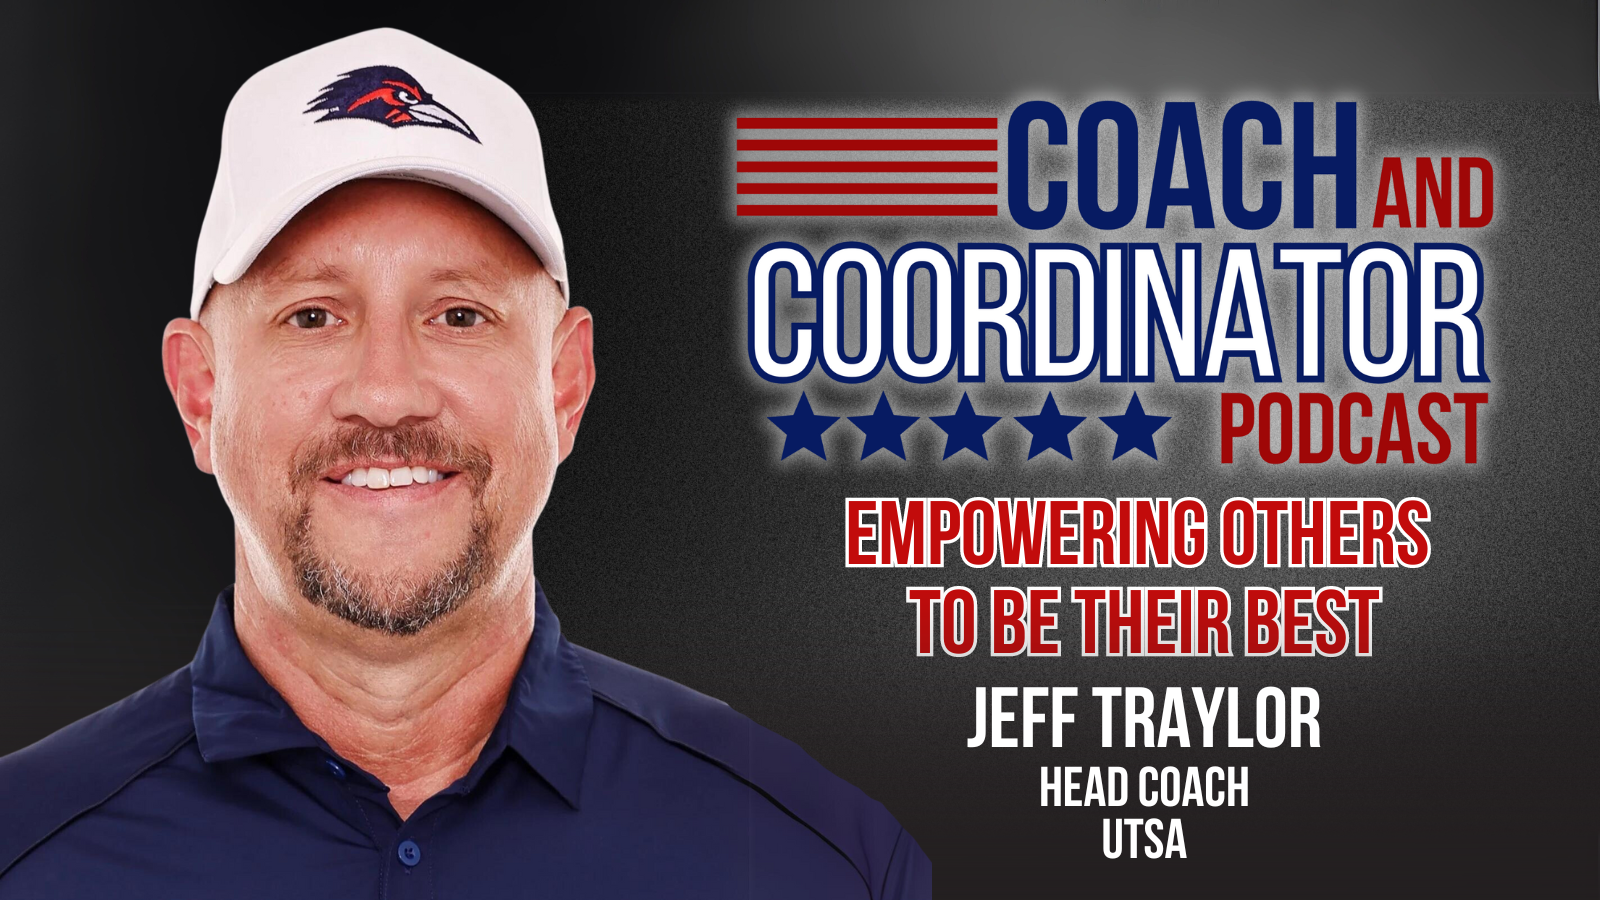 Jeff Traylor, Head Coach, UTSA